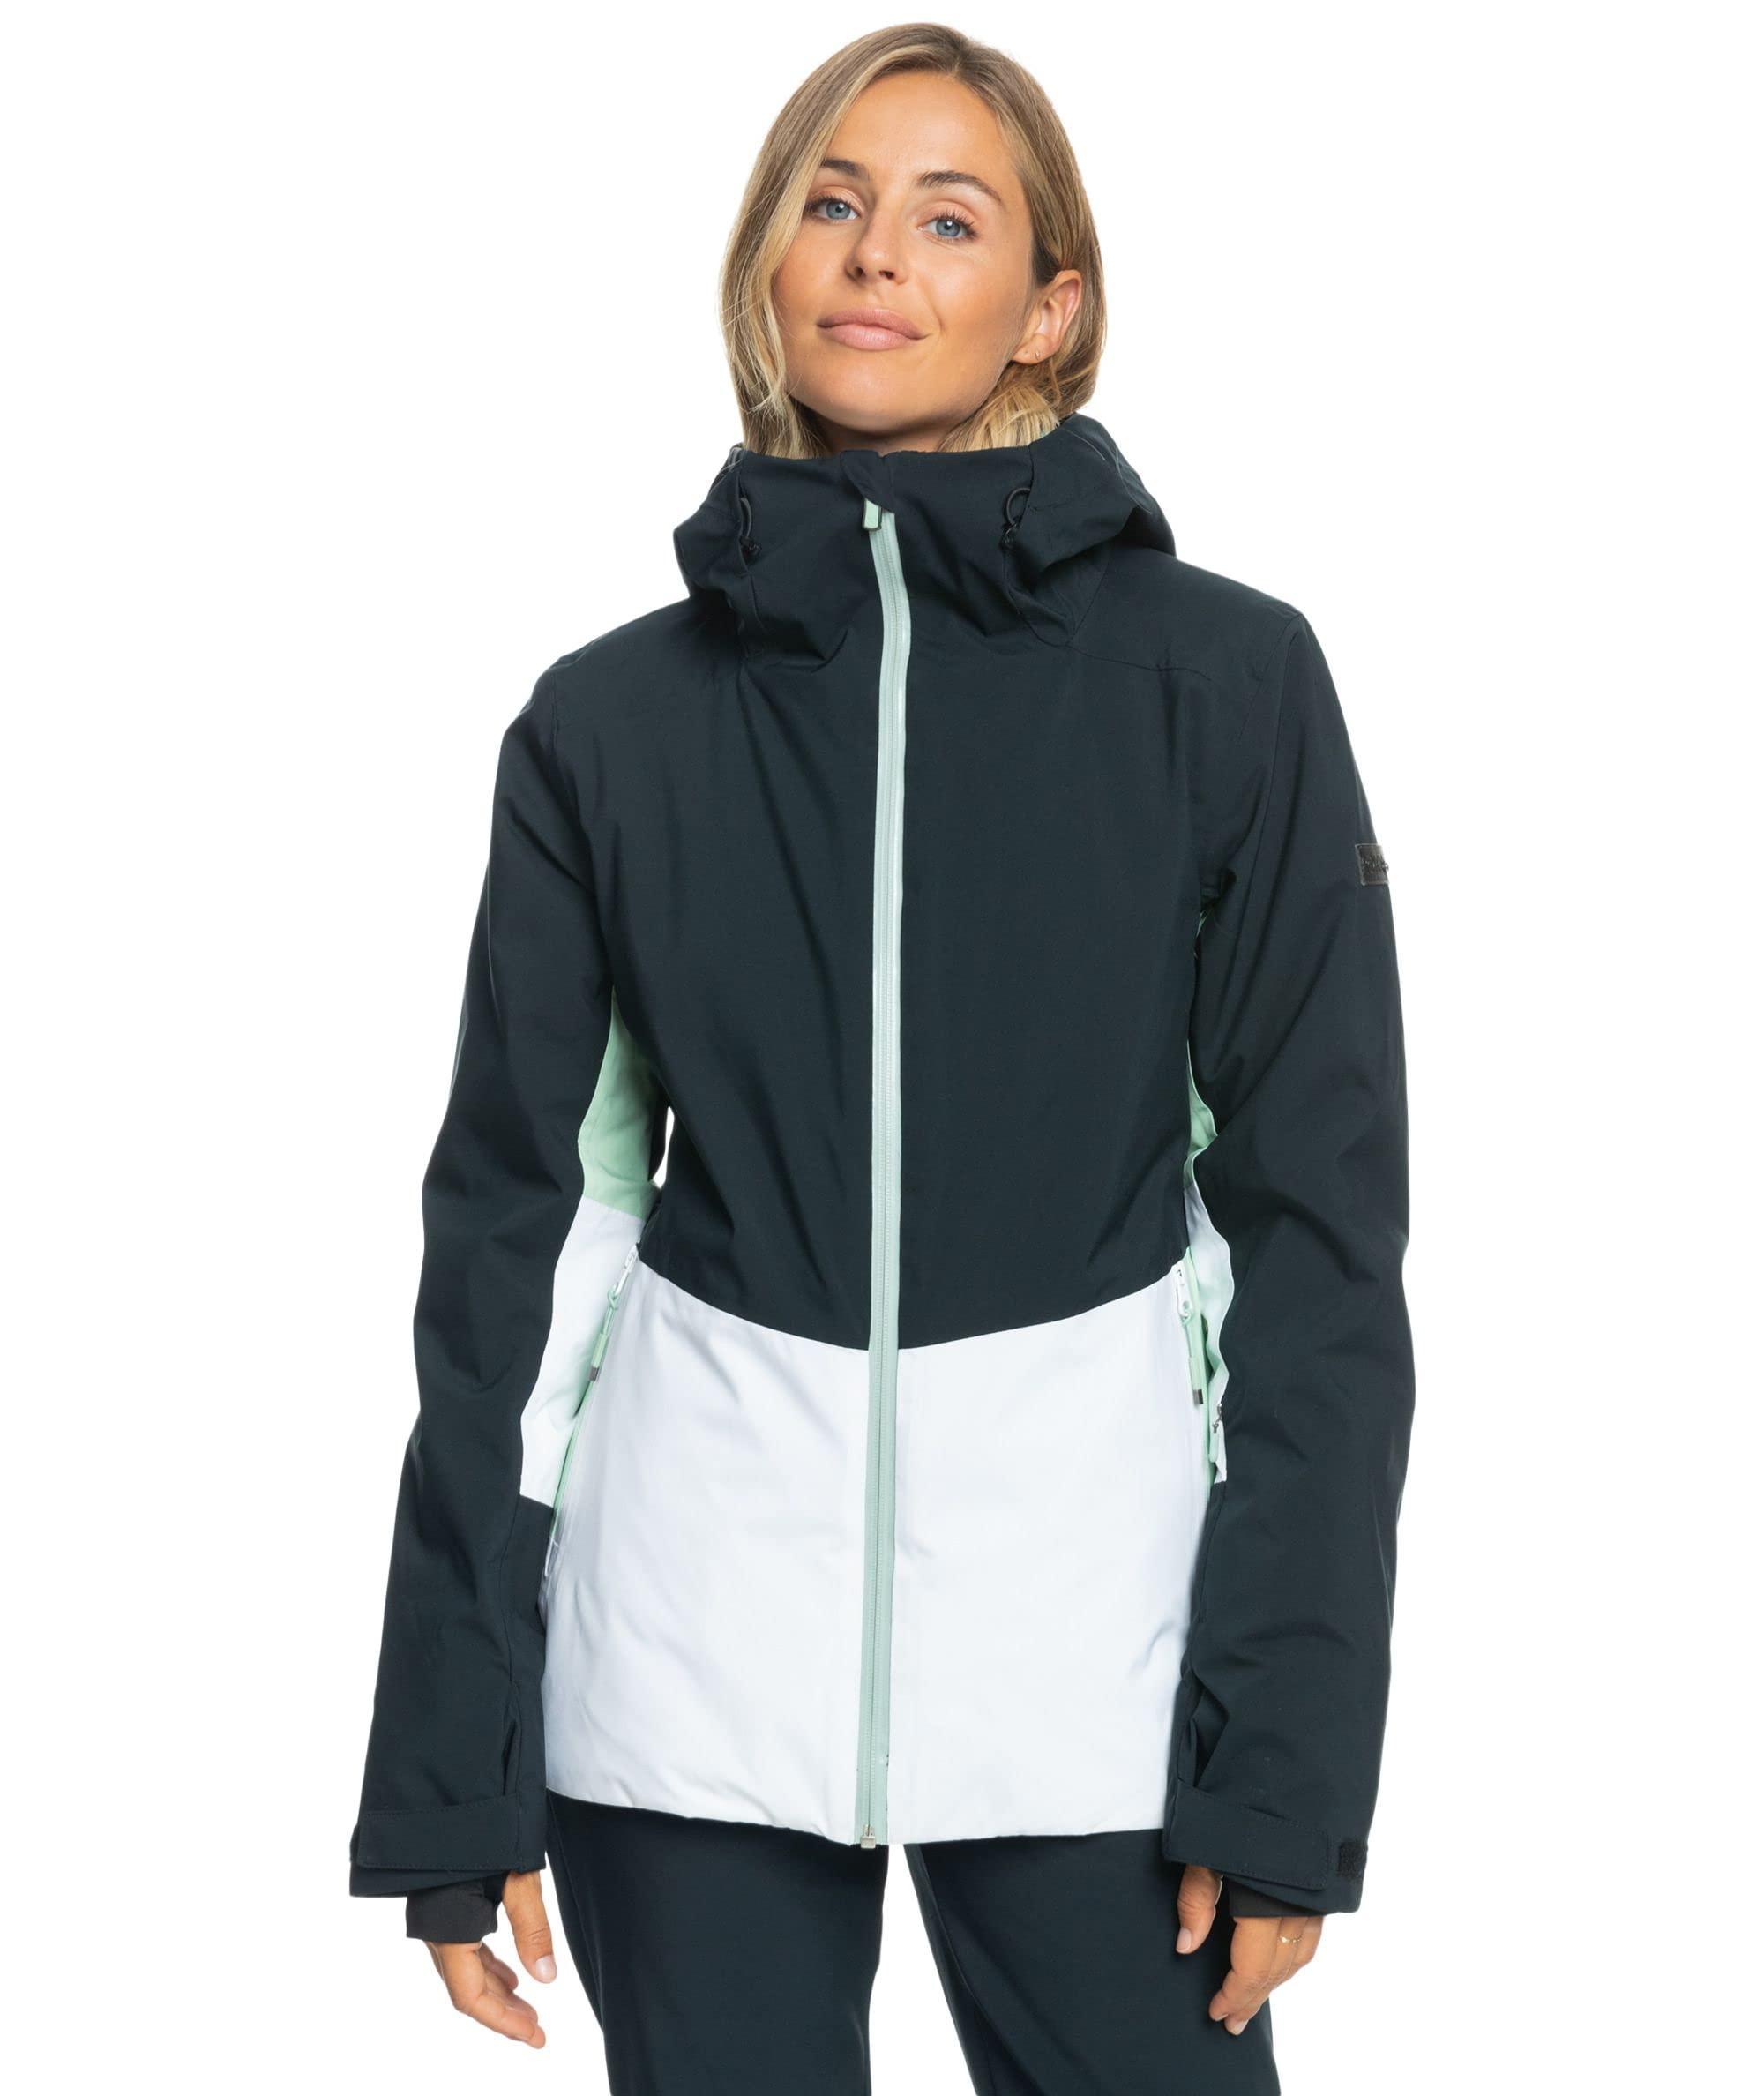 https://cdna.lystit.com/photos/amazon/34b7e37d/roxy-True-Black-Peakside-Insulated-Snow-Jacket-With-Dryflight-Technology.jpeg